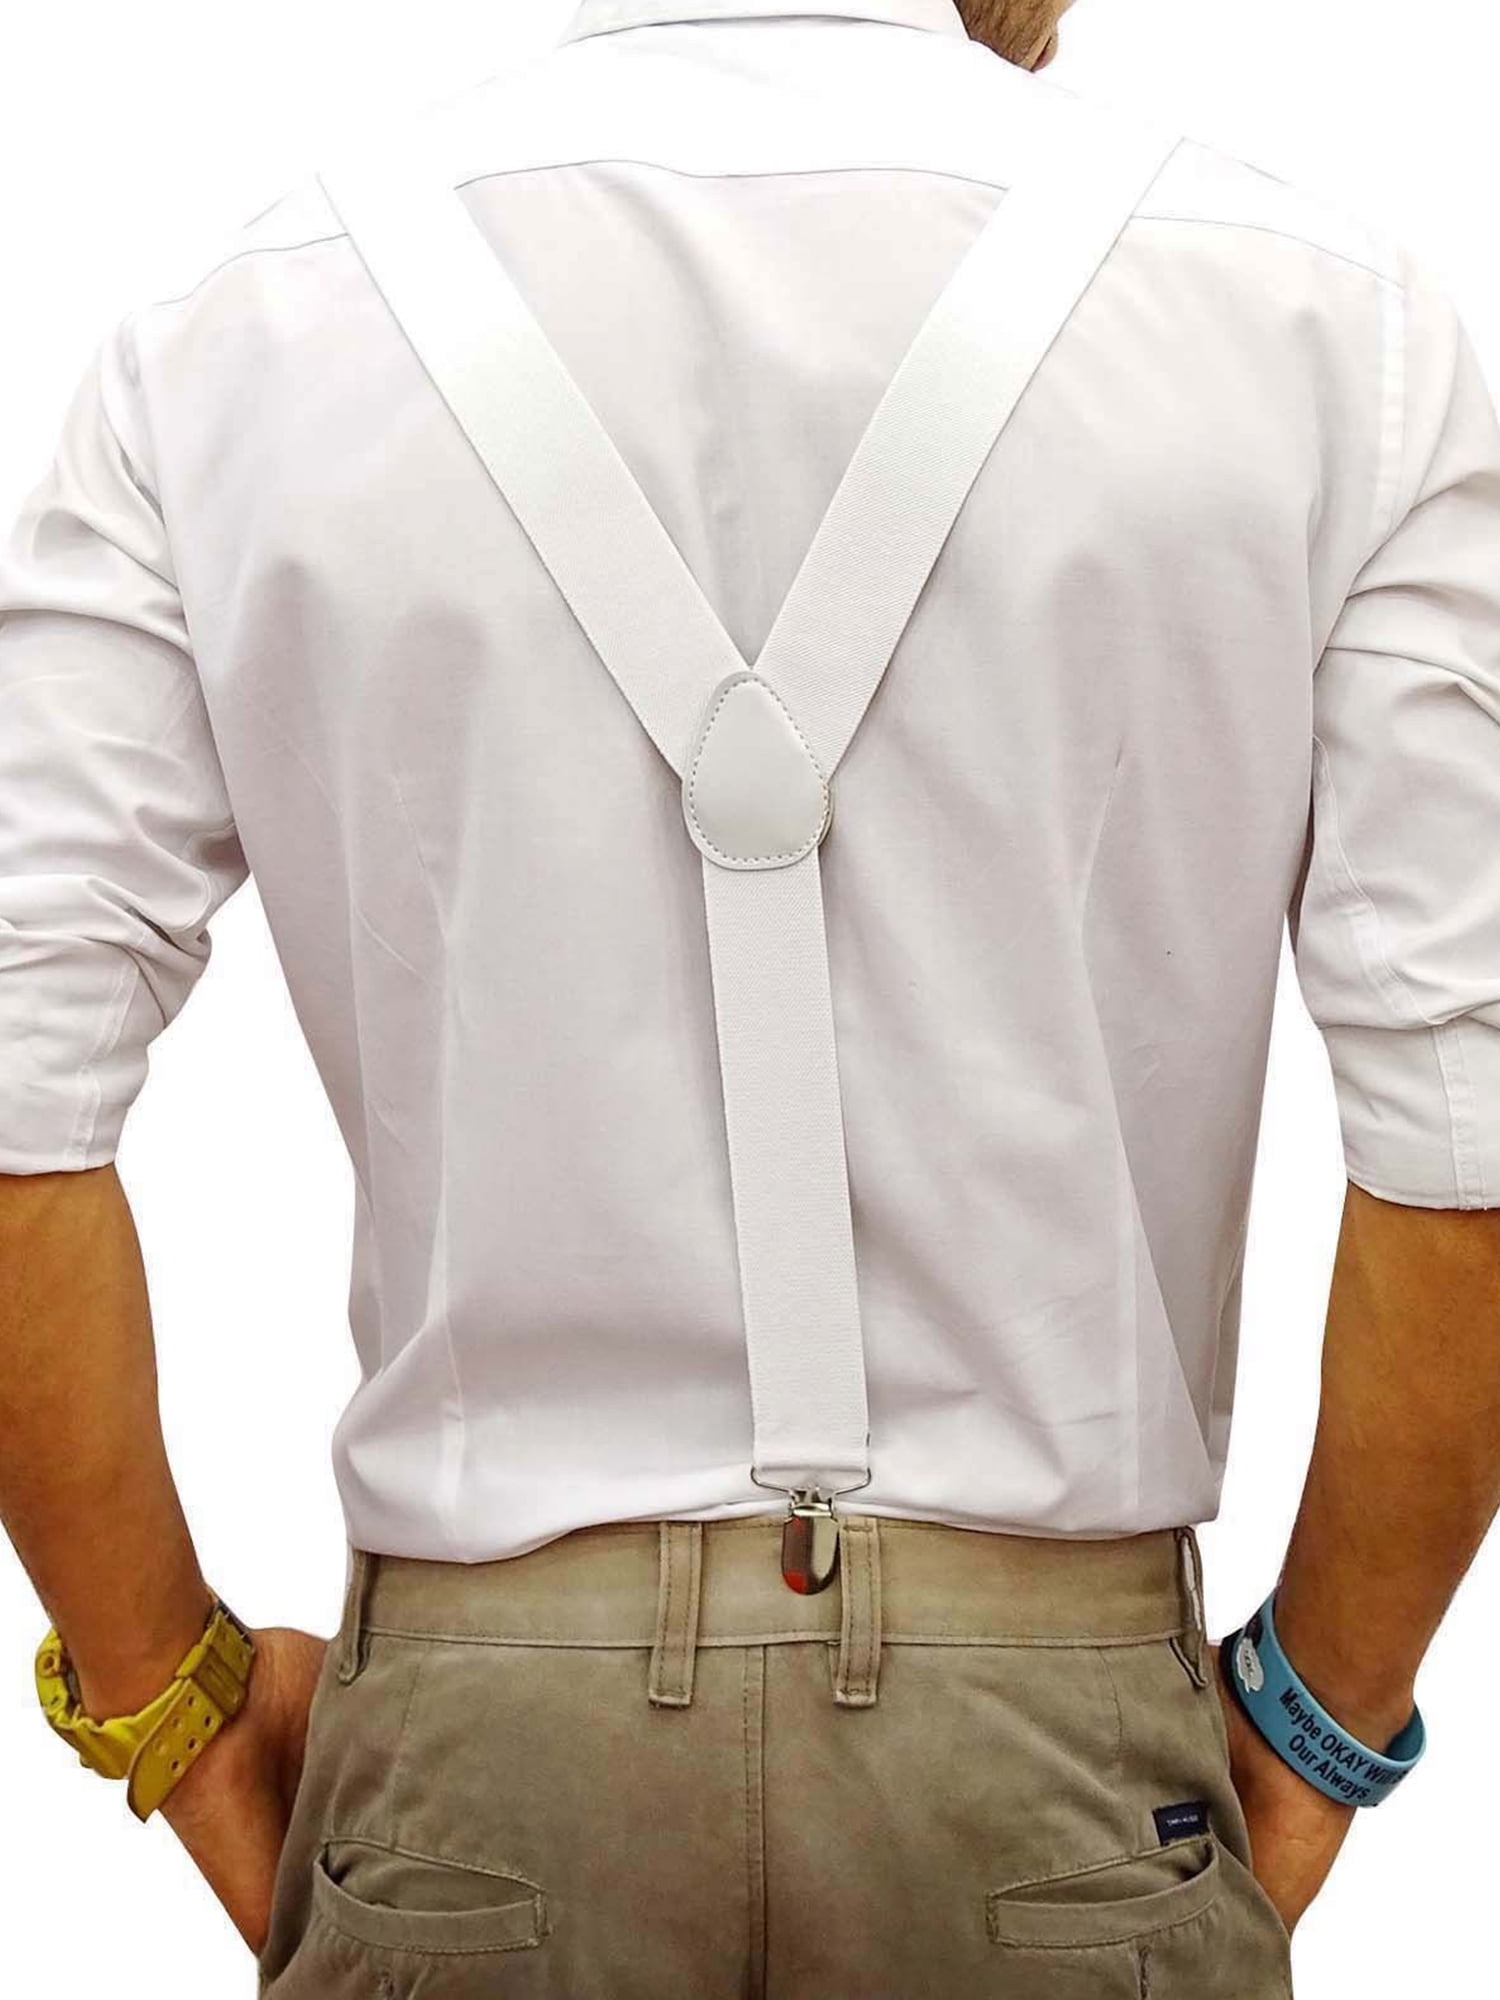 WWahuayuan Men's Shirt Stays Holder Unisex Shirt Stay Belt Super Shirt Lock  Belt For Formal at  Men's Clothing store